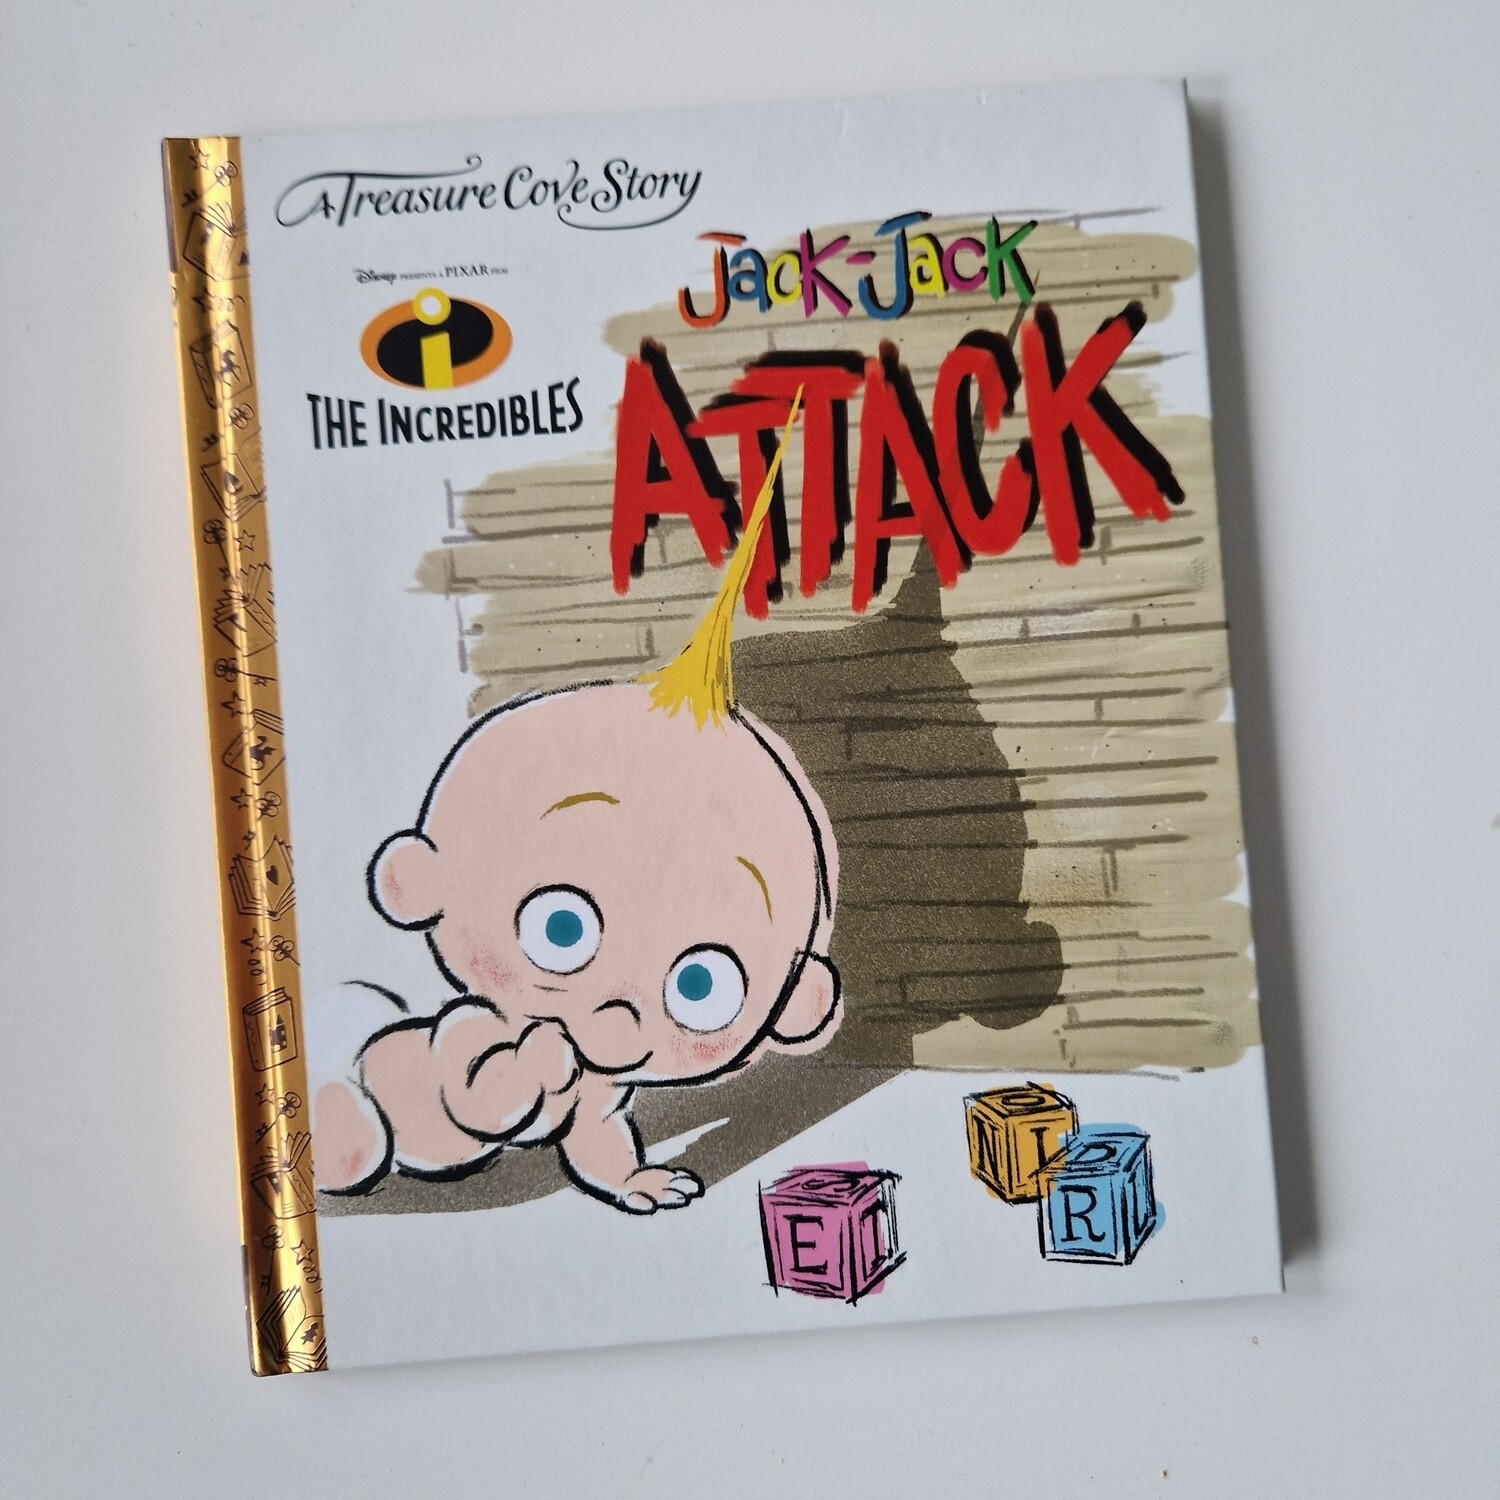 Jack Jack Attack - Incredibles Notebook